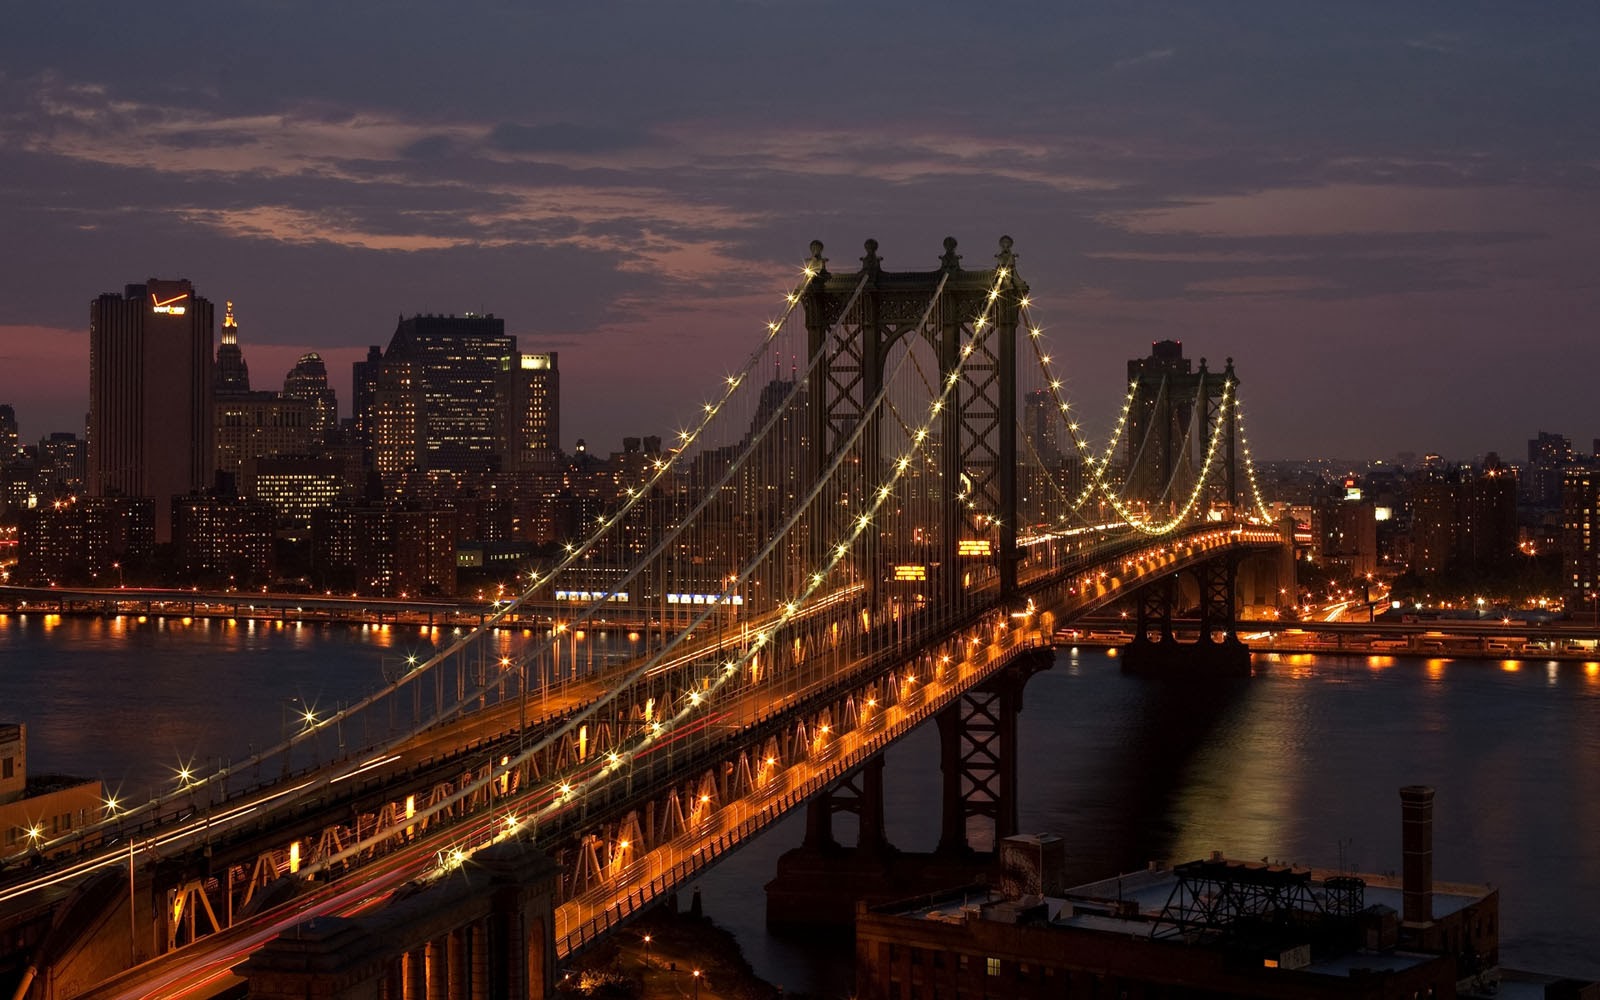 Tag Manhattan Bridge Wallpaper Background Photos Image And